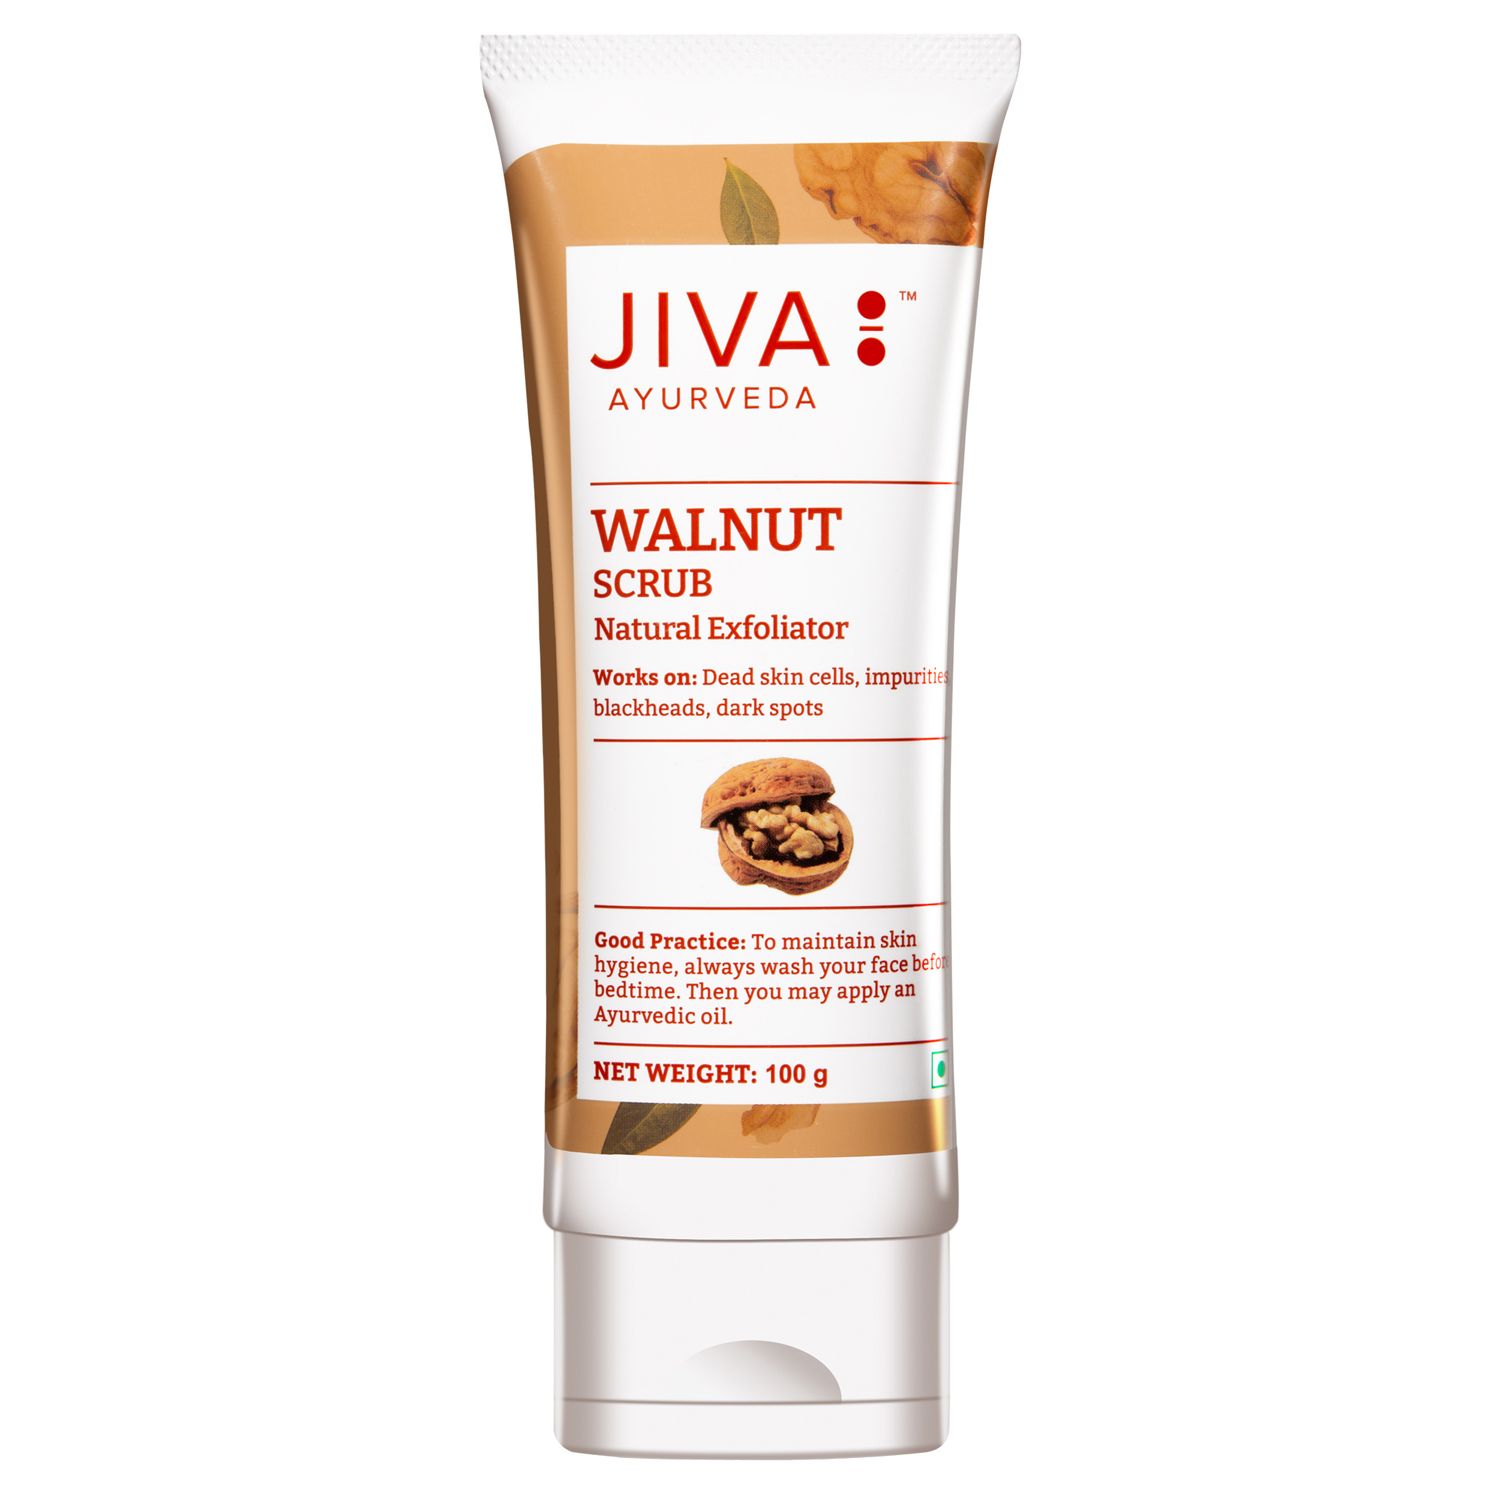 Buy Jiva Ayurveda Walnut Scrub at Best Price Online